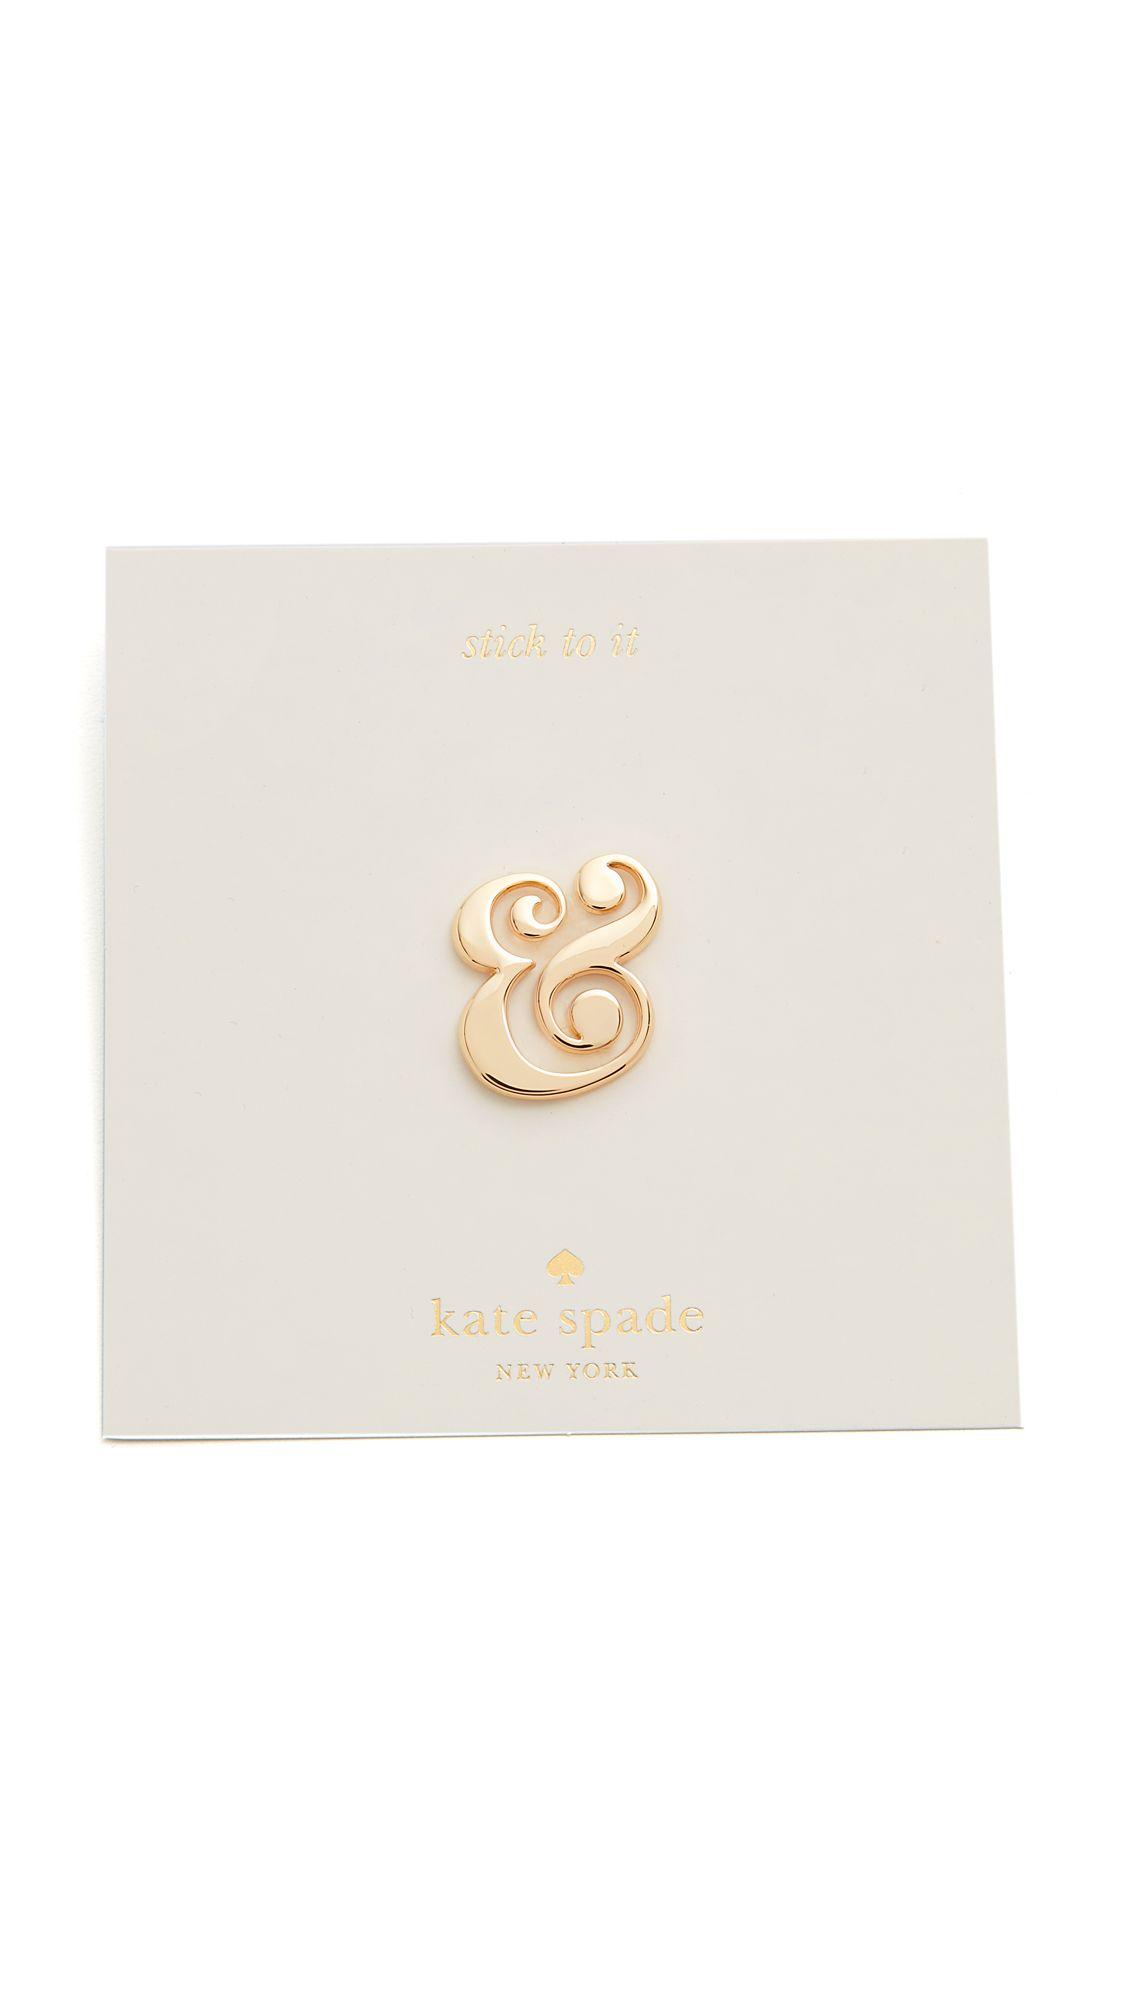 Gold Kate Spade Logo - Cheap Kate Spade New York Bags Online Discount. Kate Spade